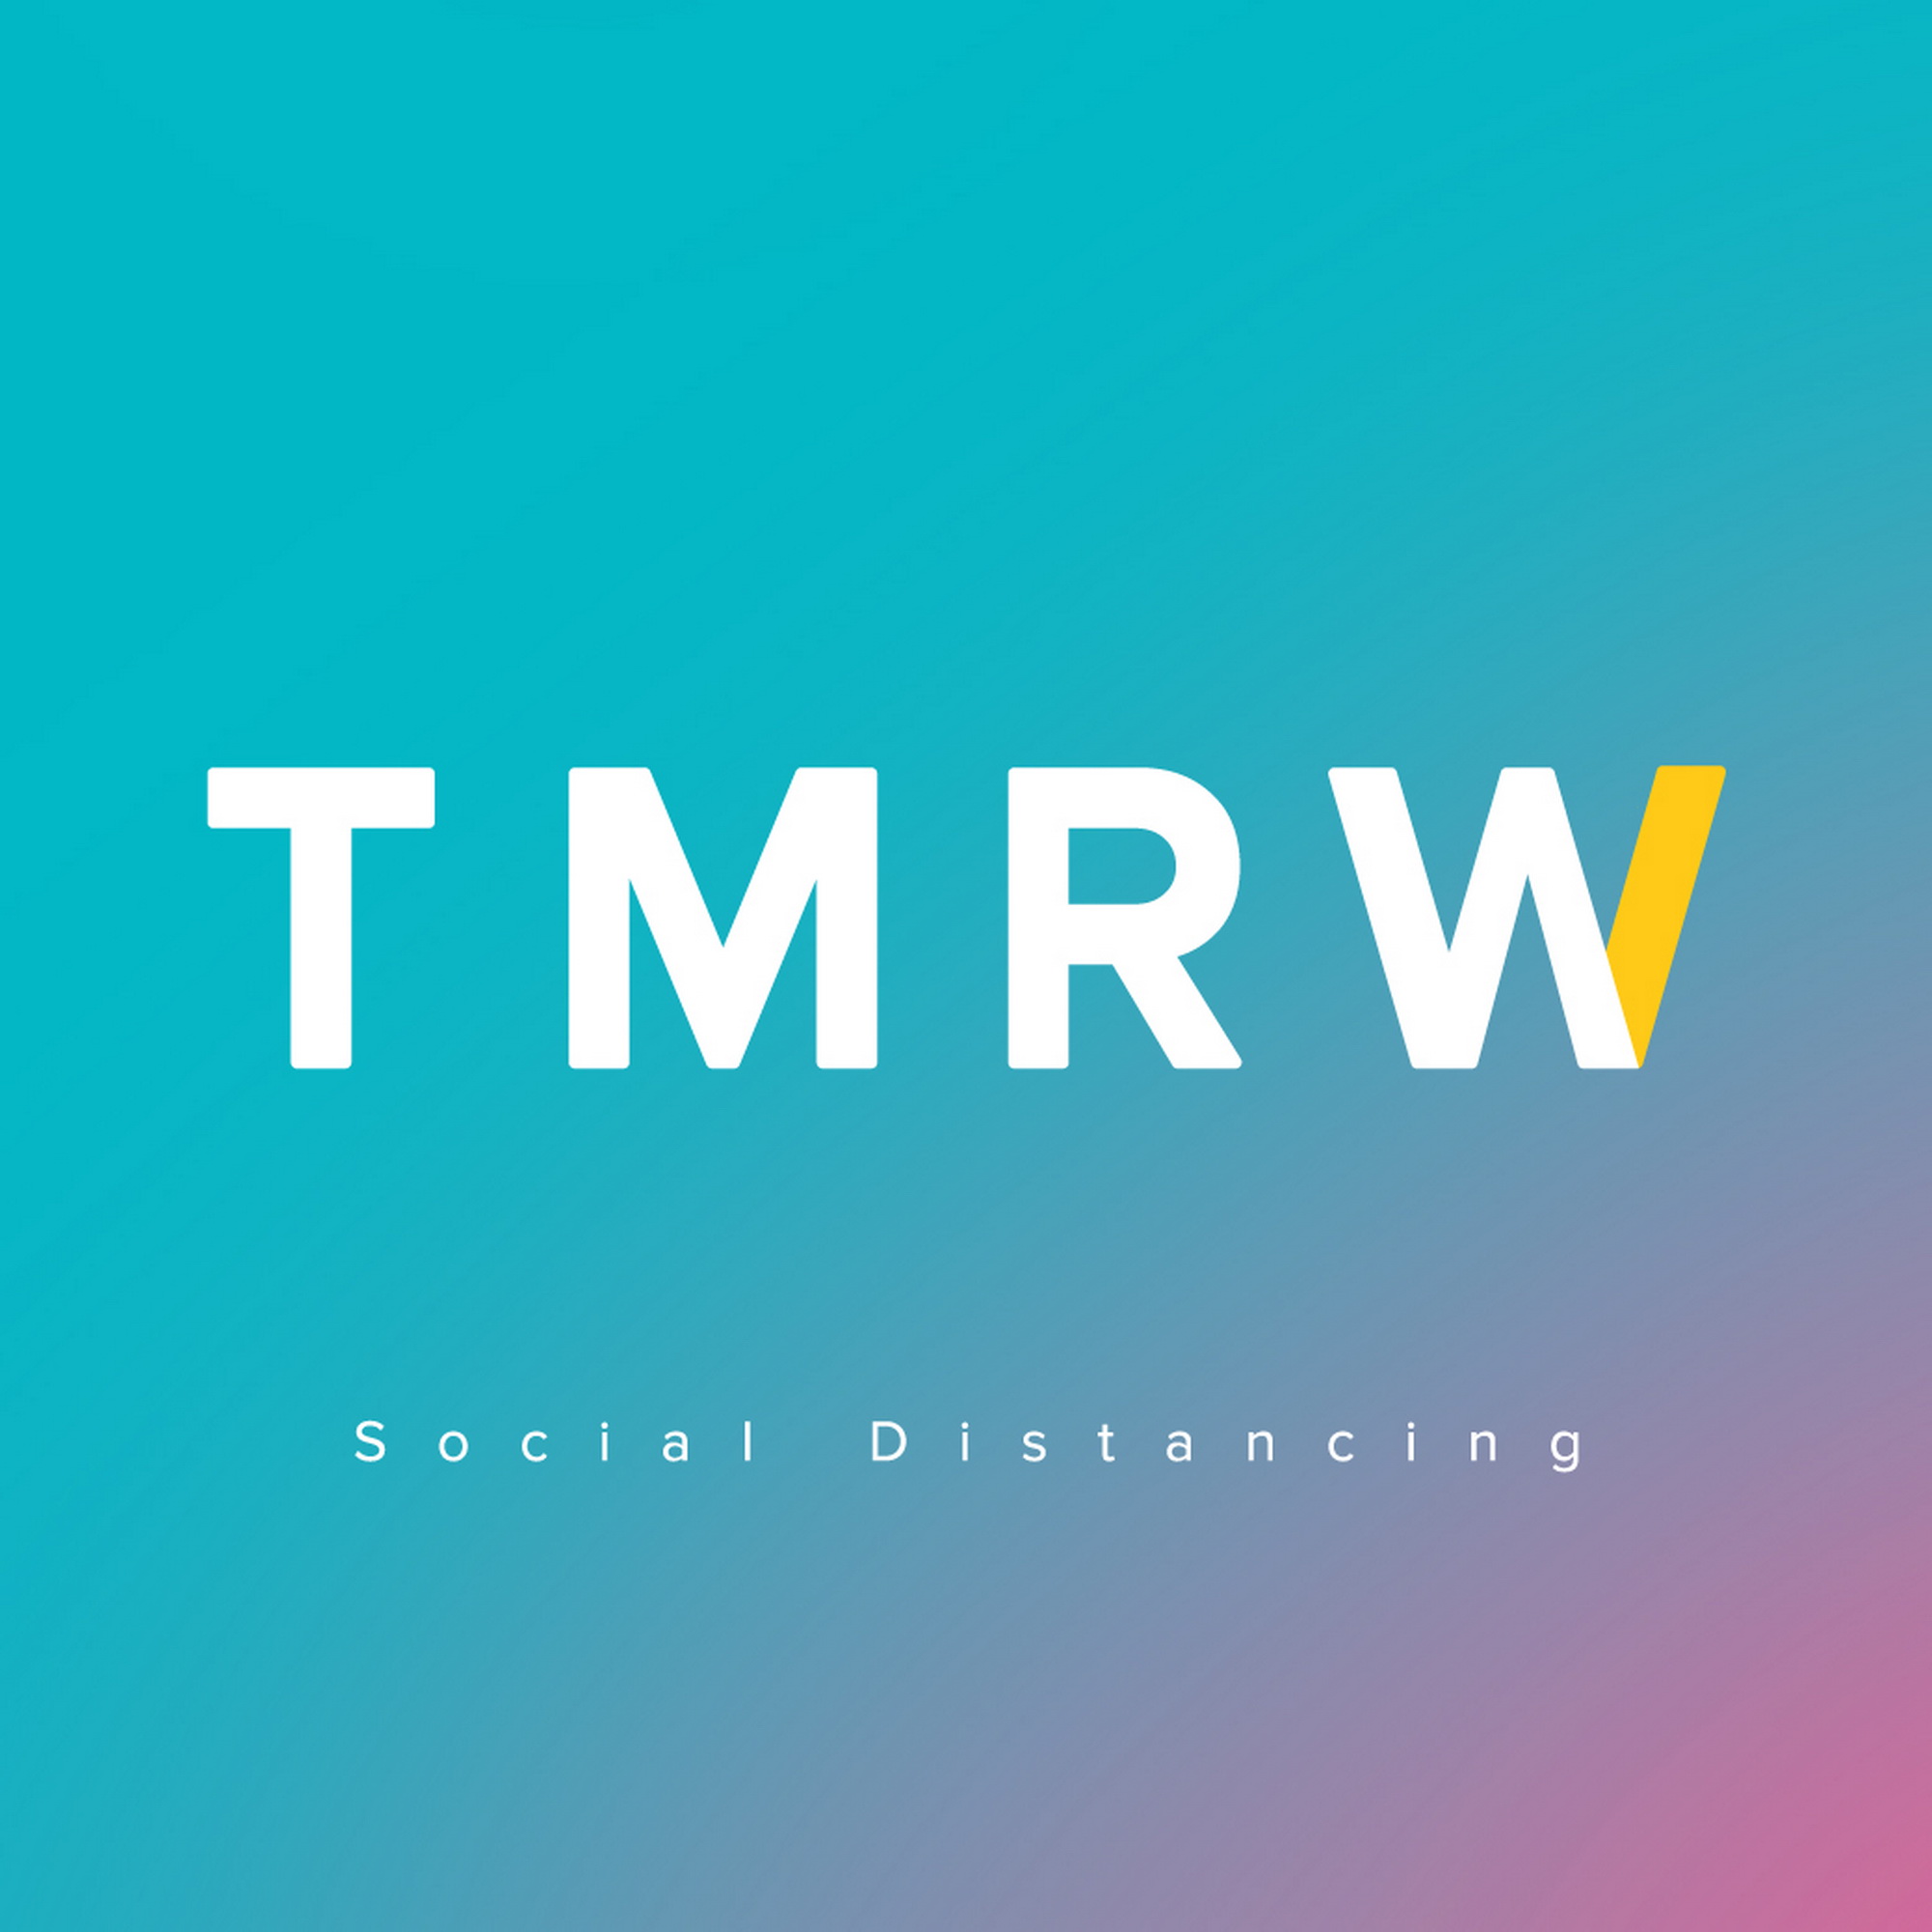 TMRW สนับสนุนให้ทุกคนรักษาระยะห่างทางสังคม รับเงินคืน 15% เมื่อสั่งอาหารหรือซื้อสินค้าออนไลน์ผ่านบัตรเครดิต